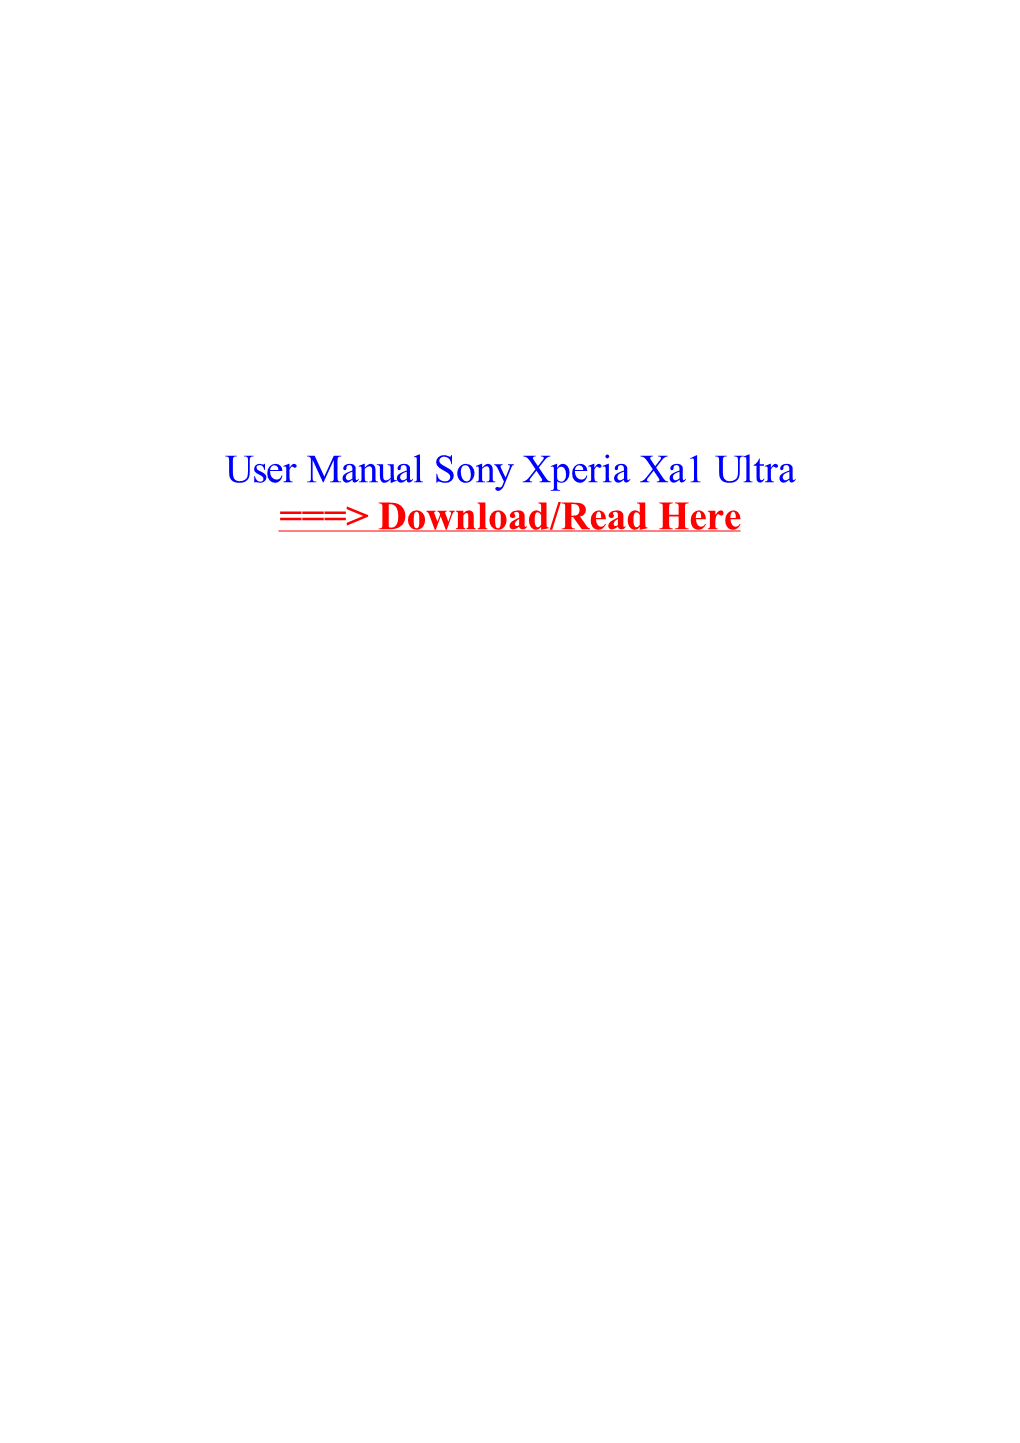 User Manual Sony Xperia Xa1 Ultra Sony Xperia XA1 Ultra G3221, G3223 Manual User Guide Instructions Download PDF Device Guides Sony G3221, Sony G3223, Sony XA1 Ultra